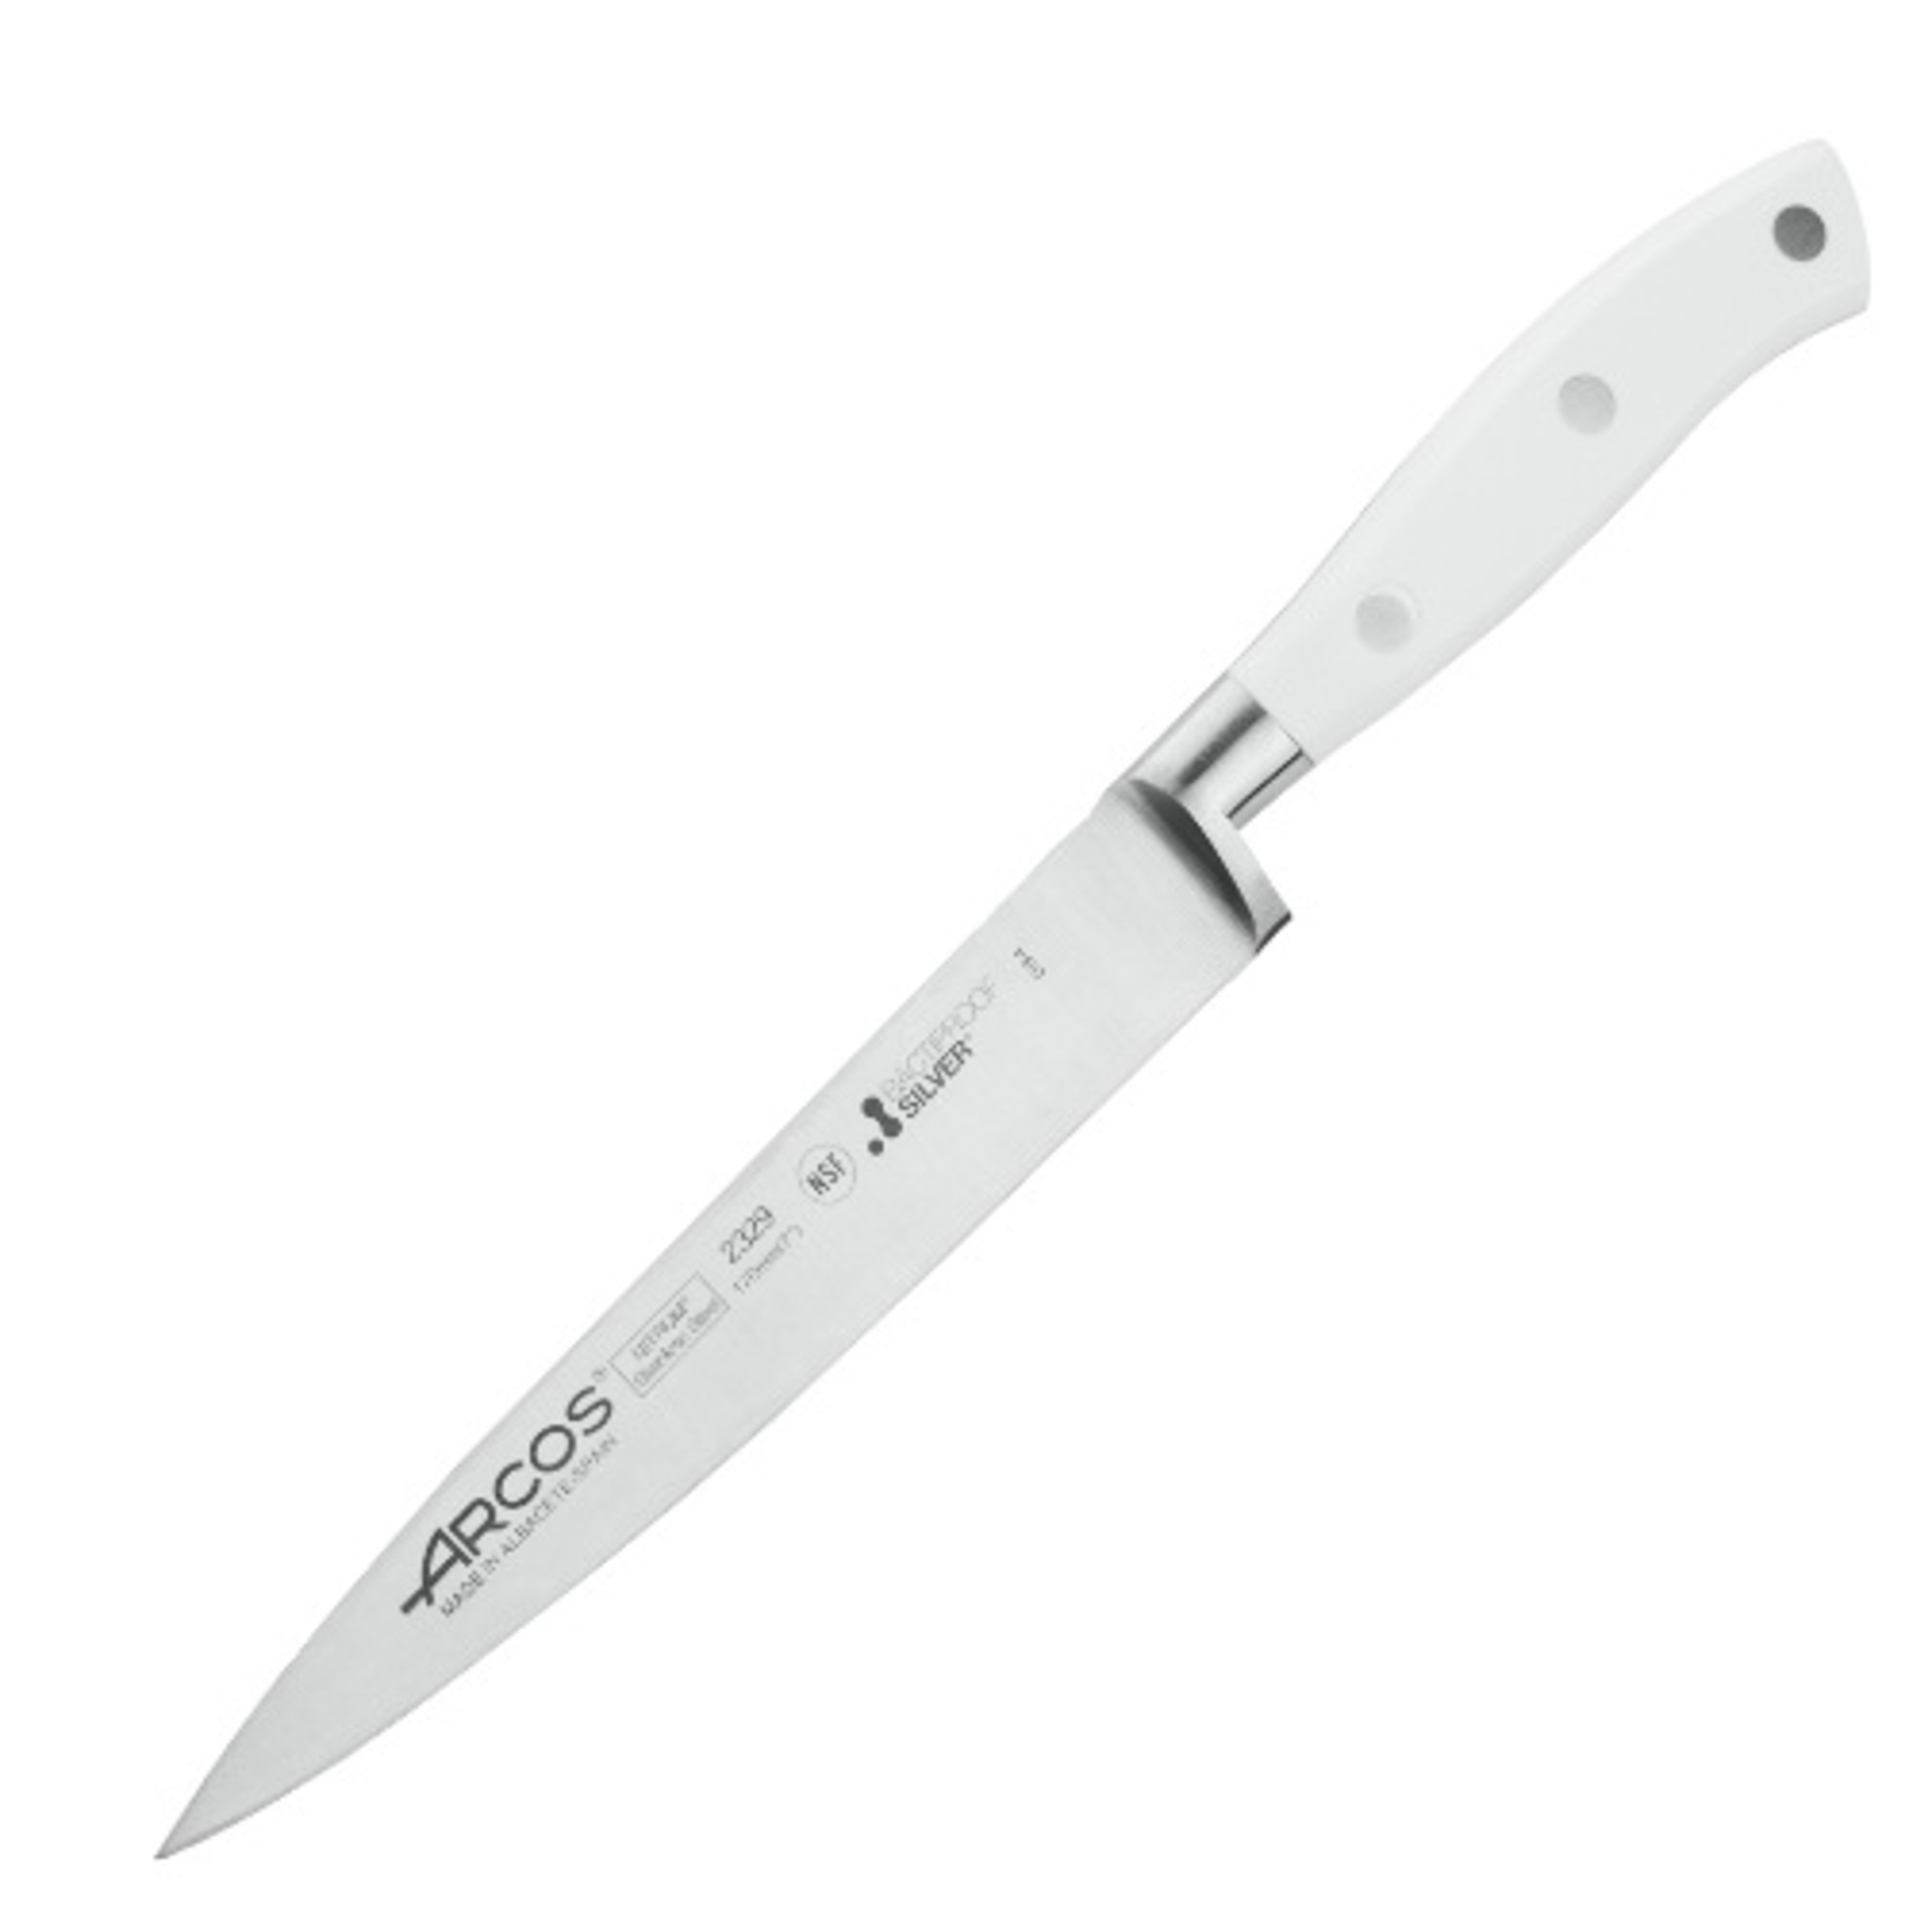 нож для филе 17 см wmf spitzenklasse 1895936032 Нож для филе 17 см riviera blanca Arcos